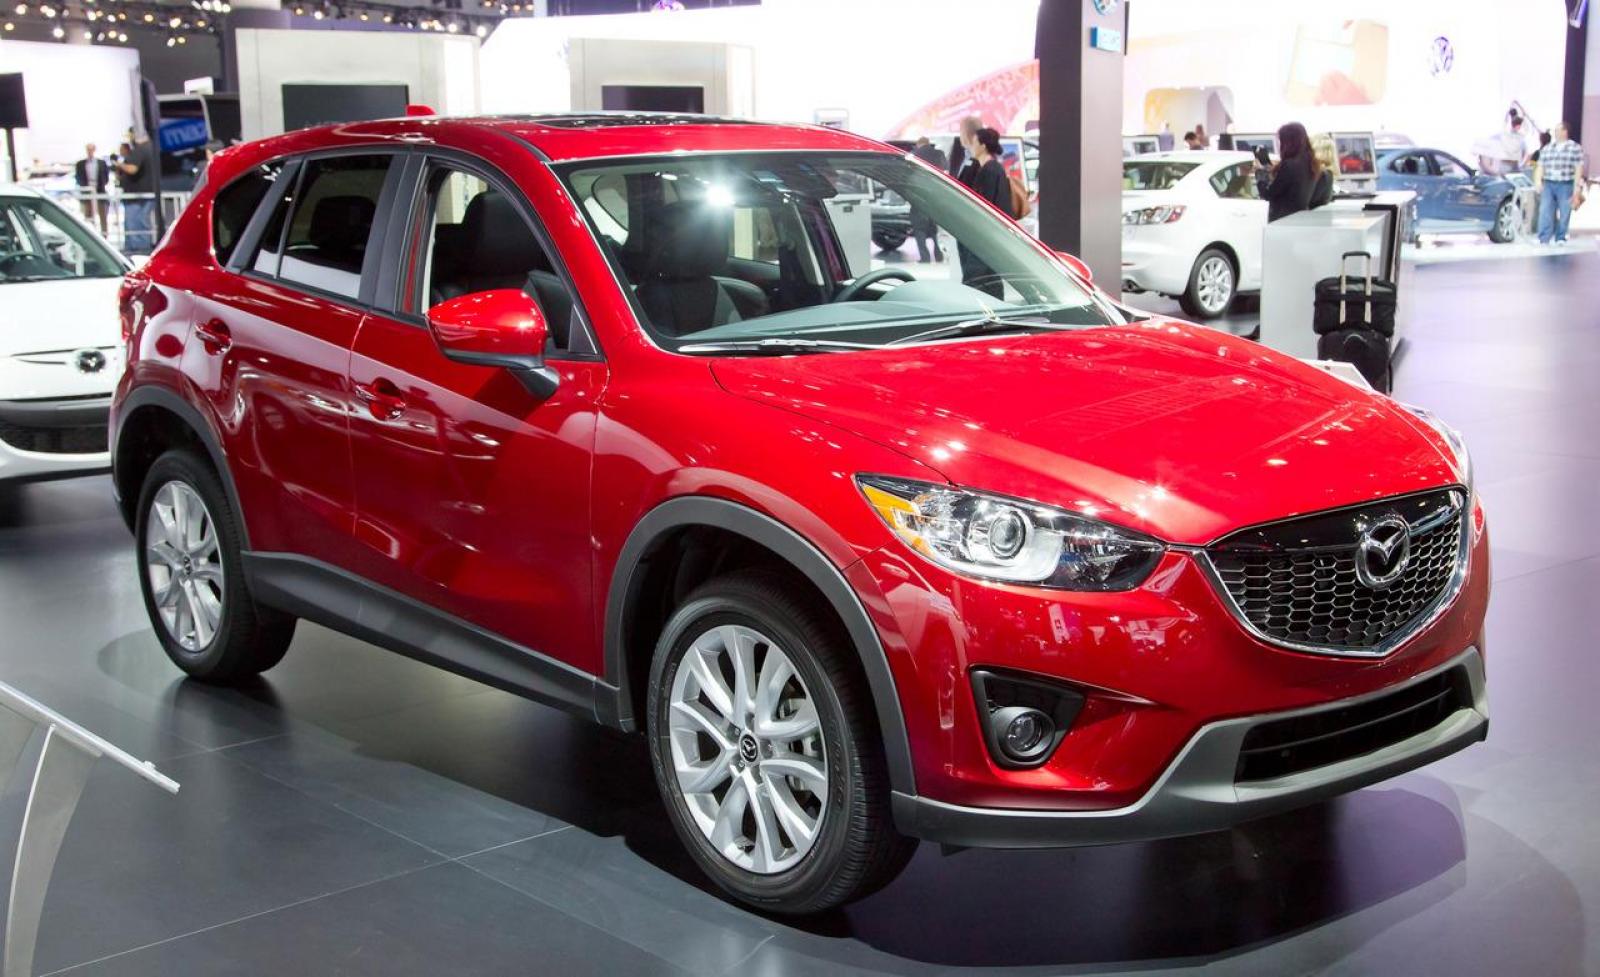 Кроссовер с пробегом цена. Mazda CX 5 красная 2014. Мазда СХ-5 2014 красный. Машина Мазда СХ-5 красный. Мазда cx5 красная.